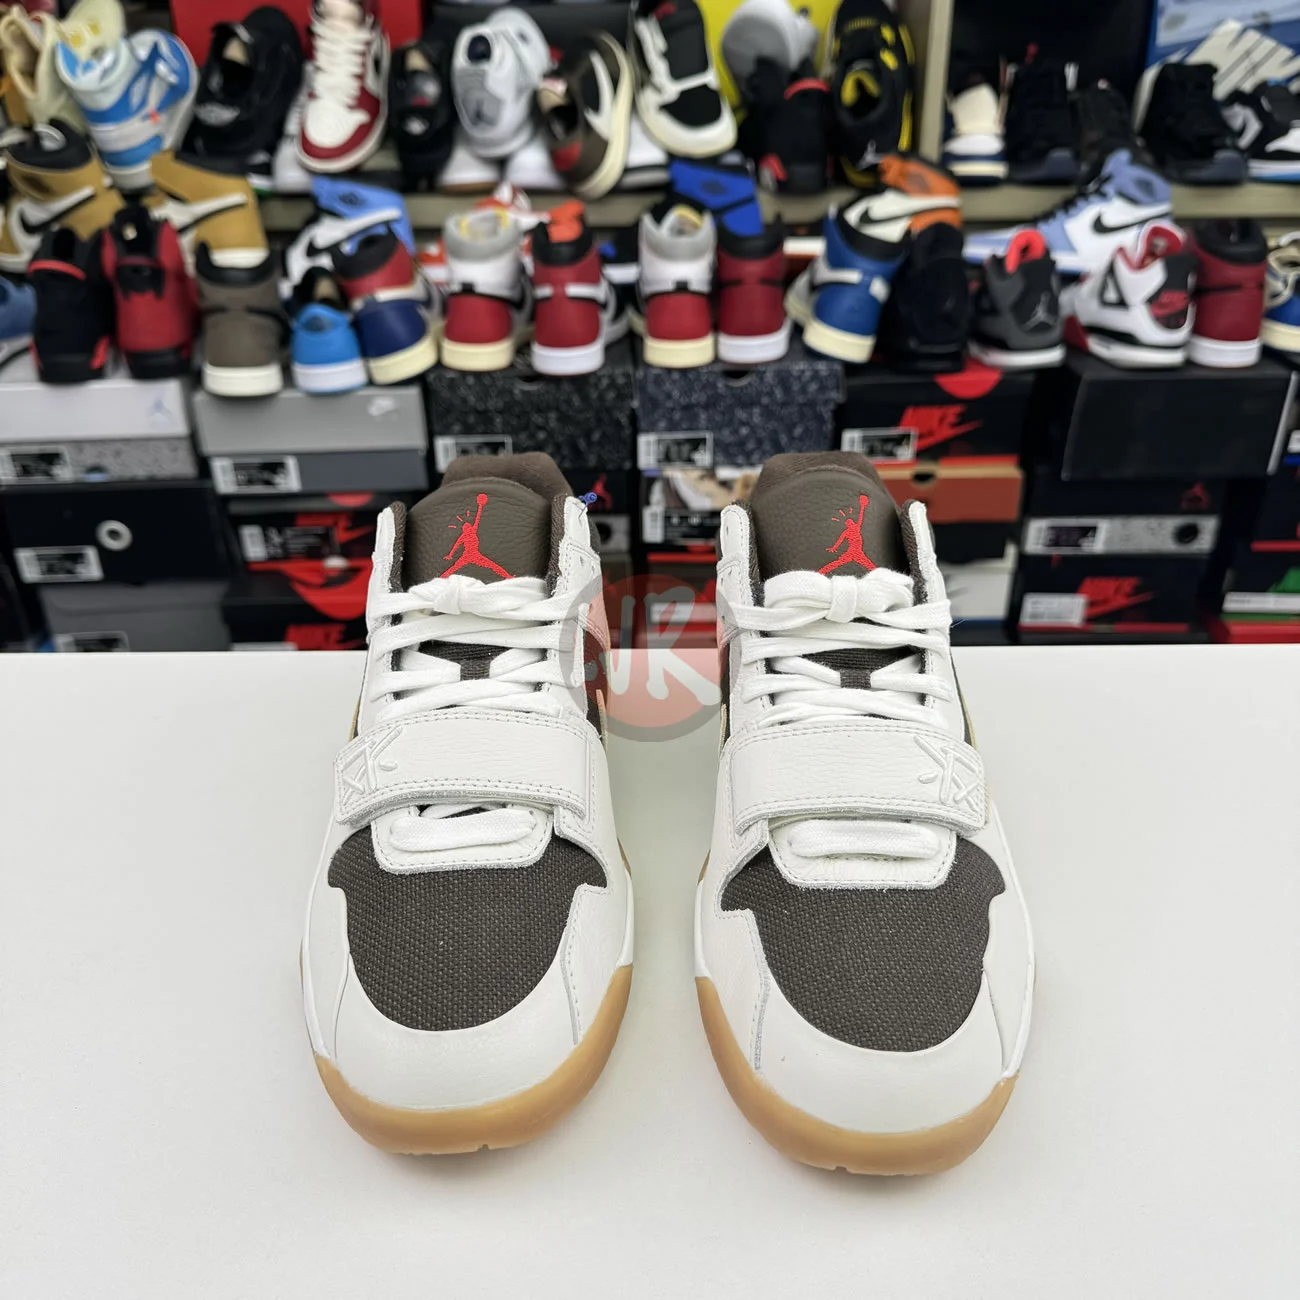 Travis Scott X Jordan Cut The Check Trainer Release Date Ljr Sneakers (9) - bc-ljr.com